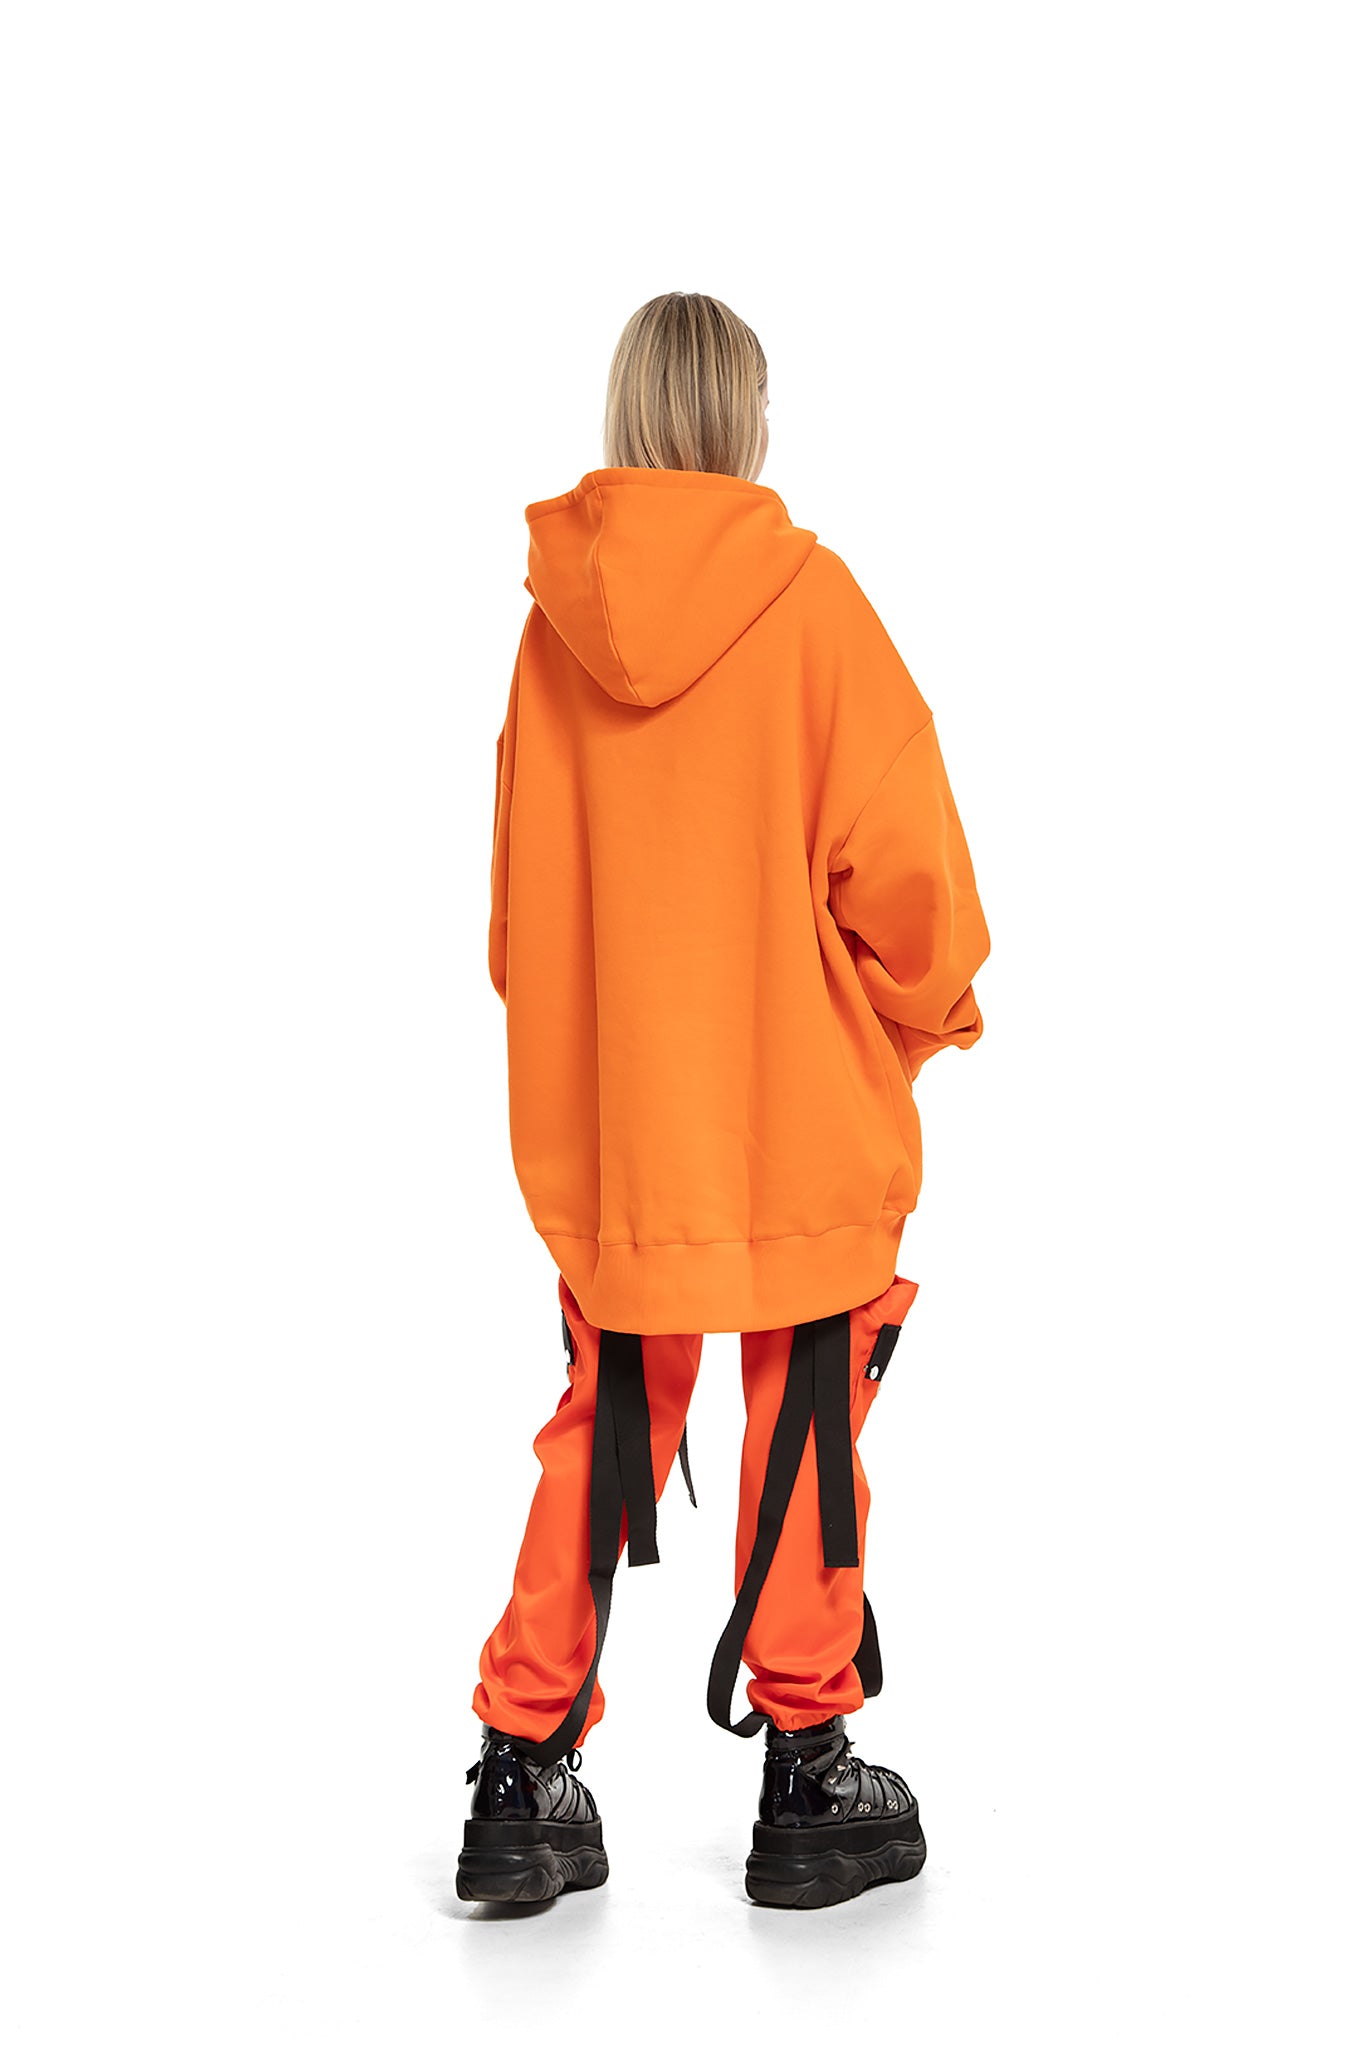 Super Oversized [Orange] Hoodie